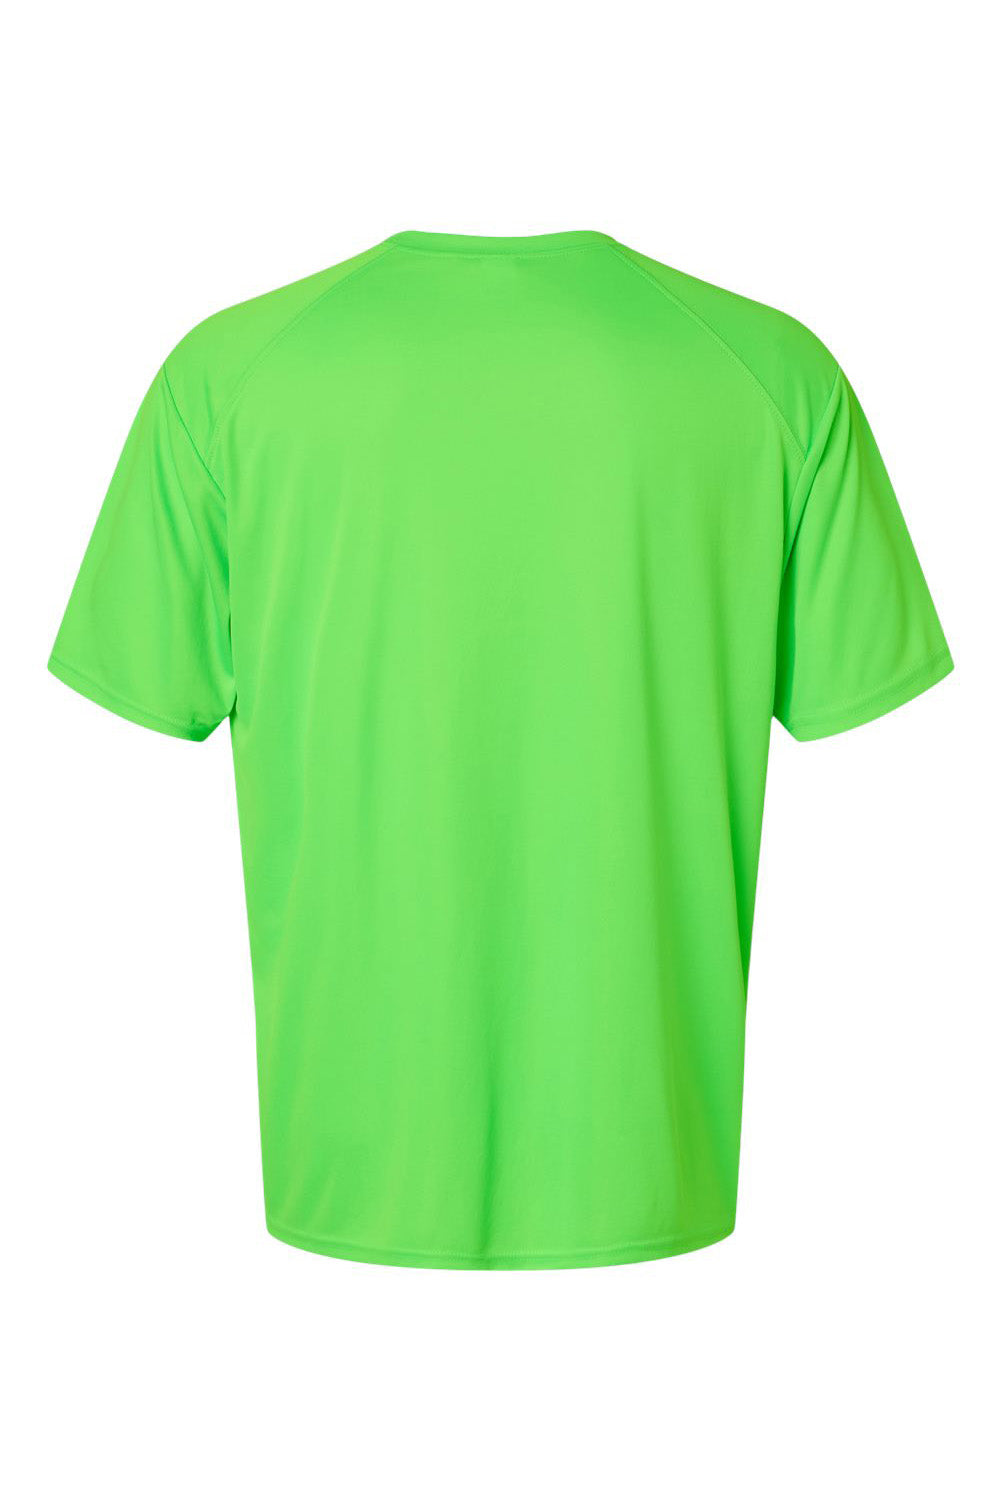 Paragon 200 Mens Islander Performance Short Sleeve Crewneck T-Shirt Neon Lime Green Flat Back